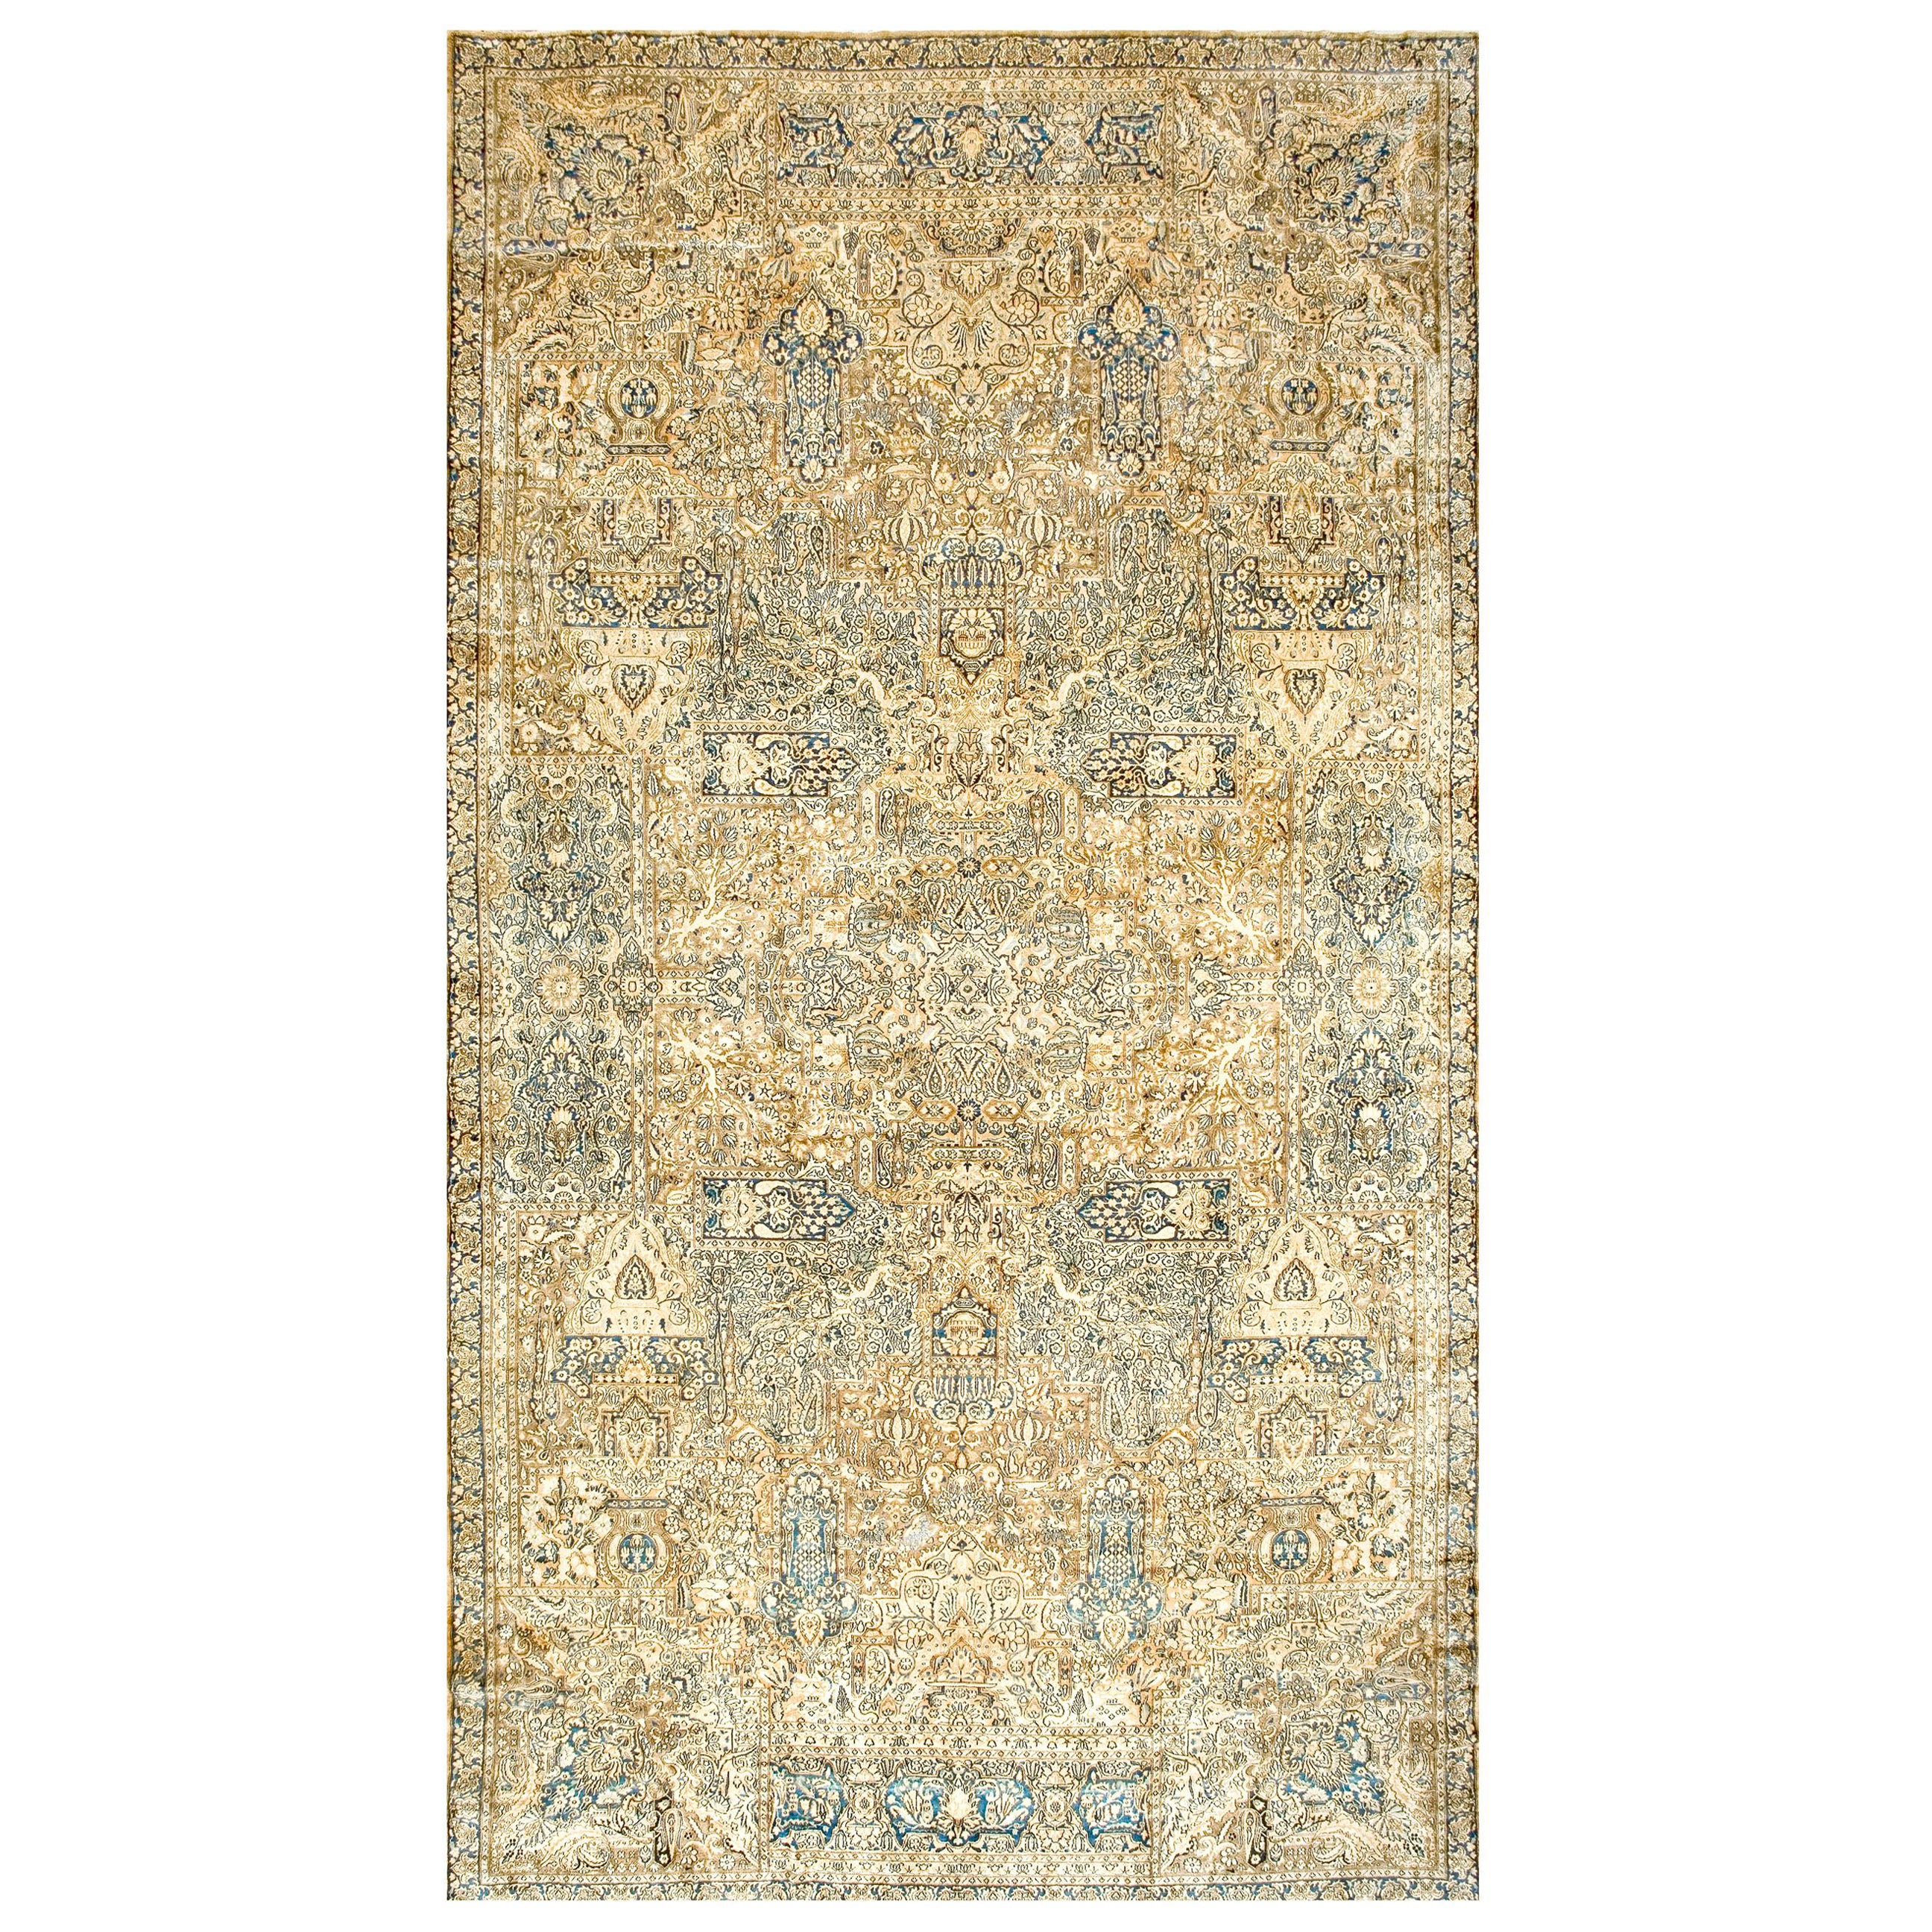 Early 20th Century S.E. Persian Kirman Carpet ( 11'8" x 21'6" - 356 x 655 ) For Sale